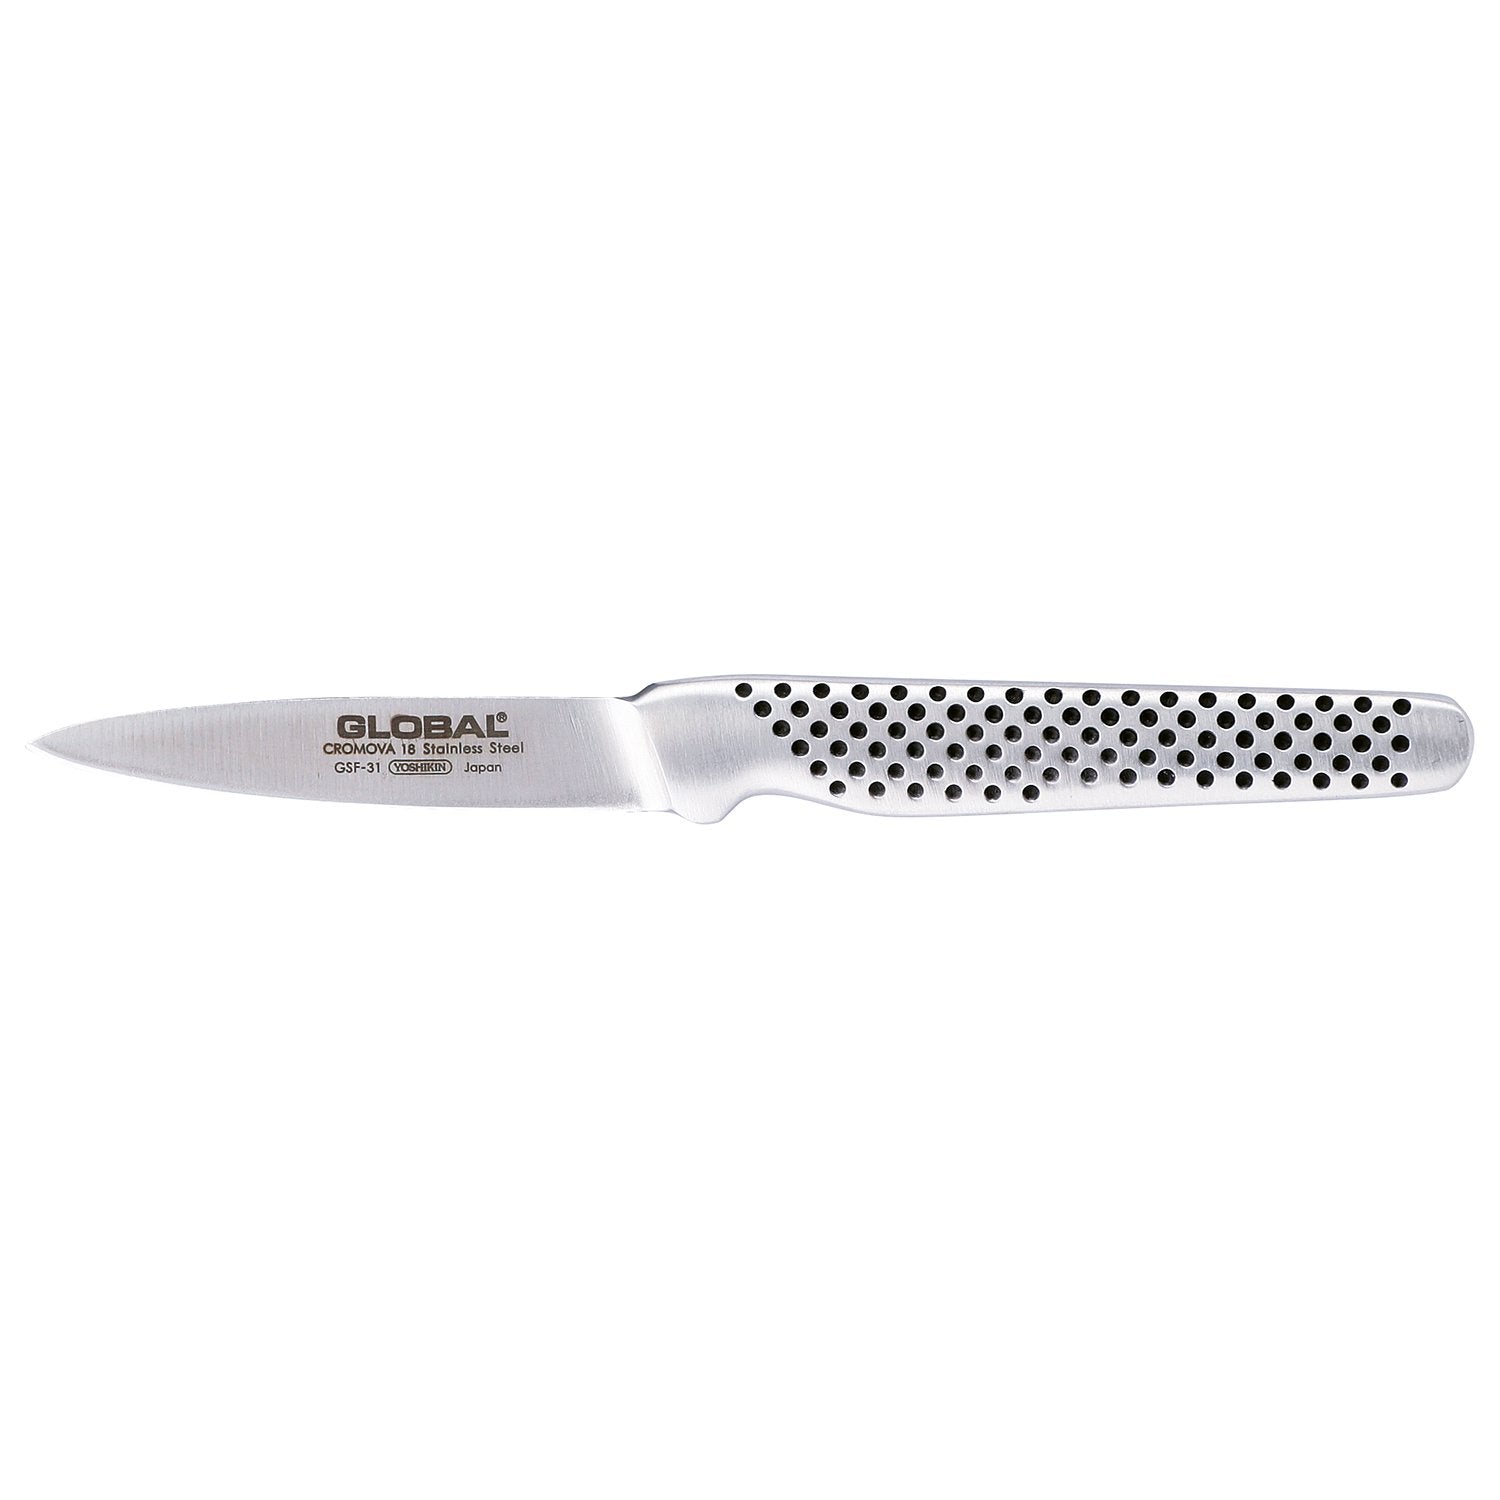 Global GSF 31 čisticí nůž, 8 cm